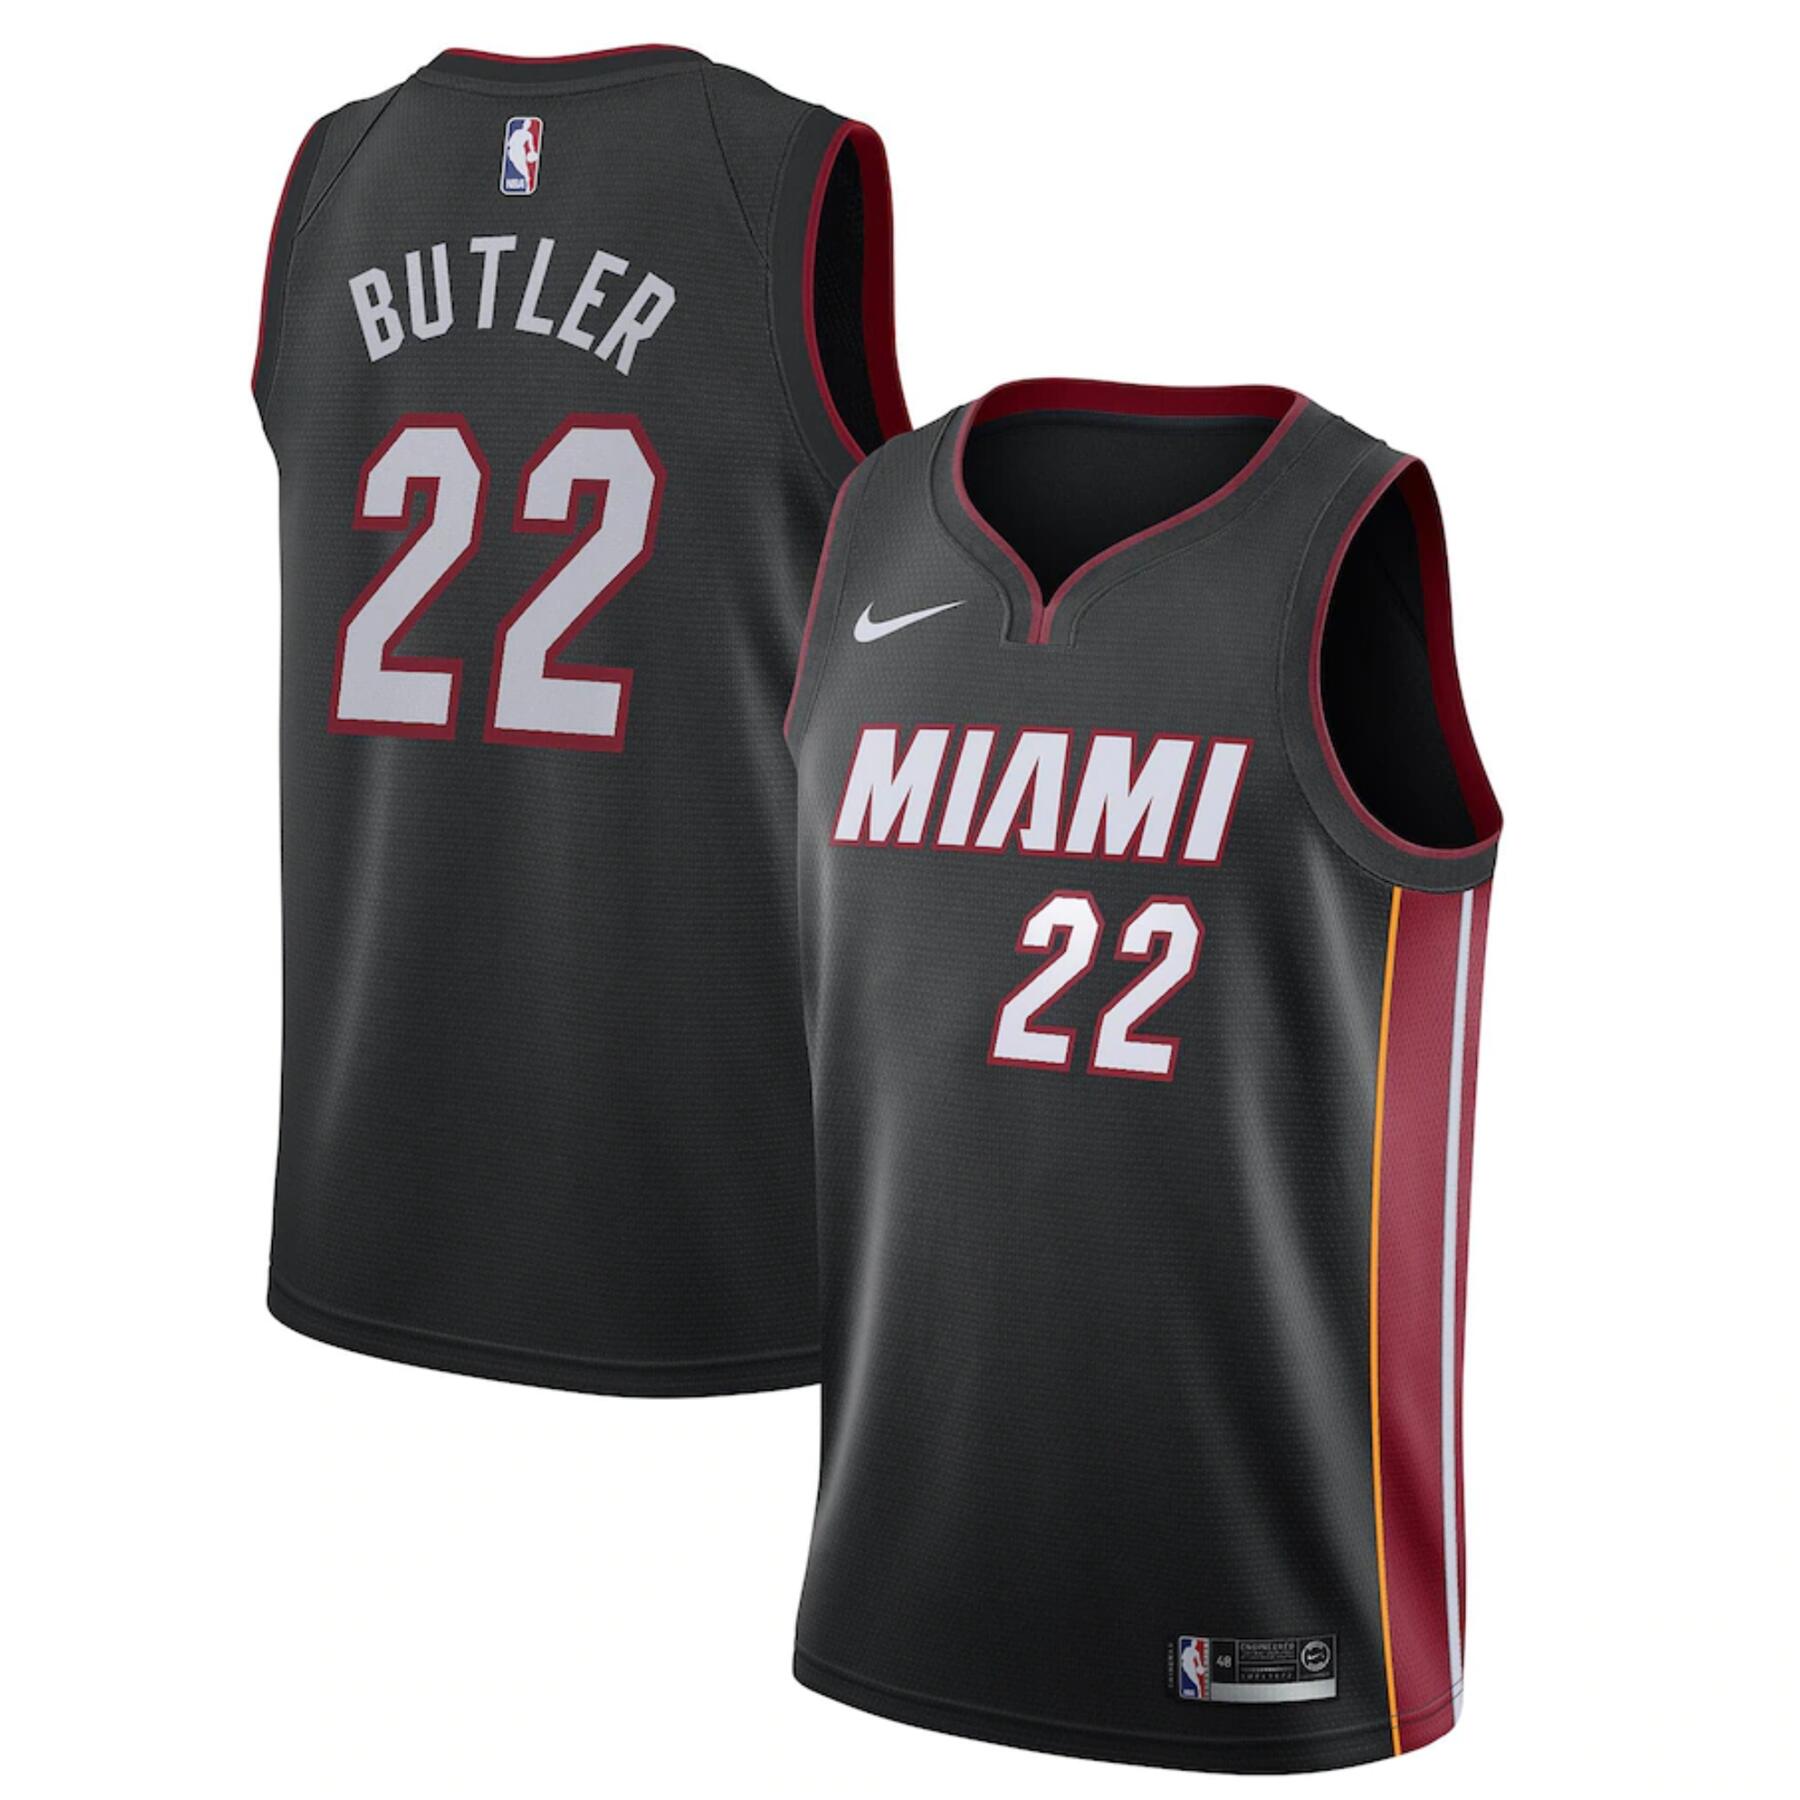 NIKE Miami Heat NBA Jersey Men's Nike Butler 22 Icon Basketball Vest